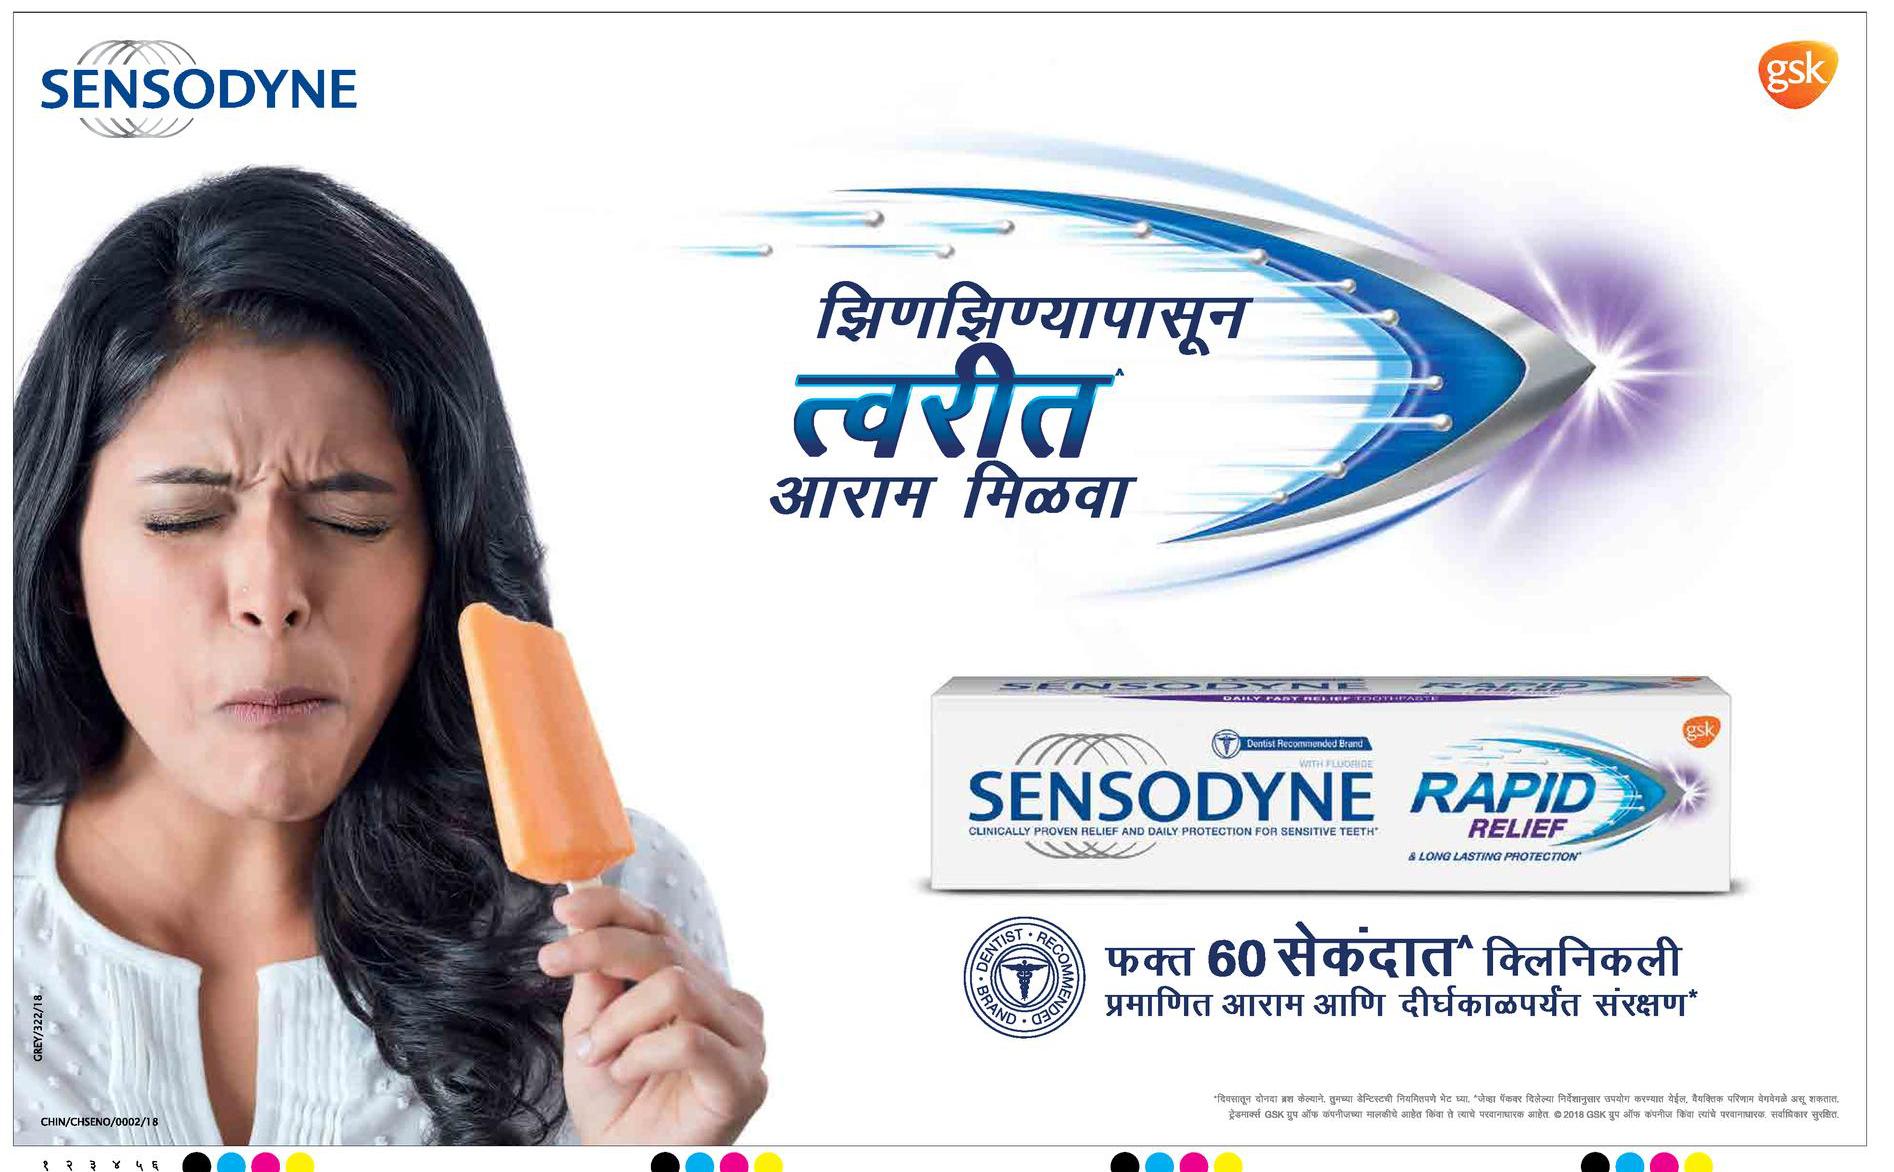 Sensodyne Rapid Relief Tooth Paste Ad Advert Gallery